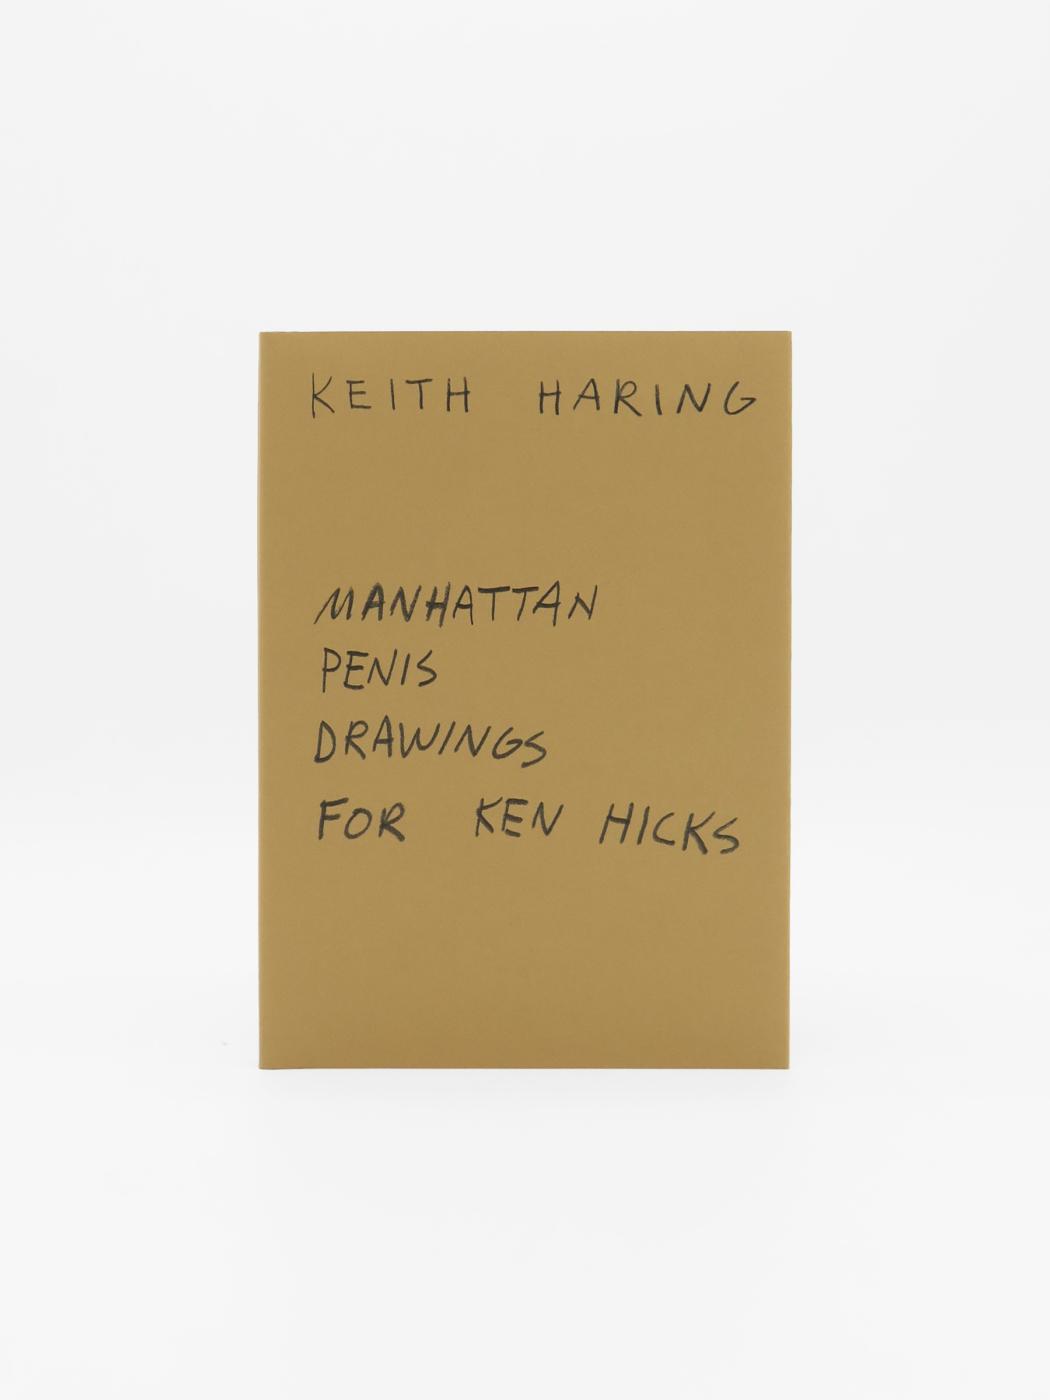 Keith Haring, Manhattan Penis Drawings for Ken Hicks